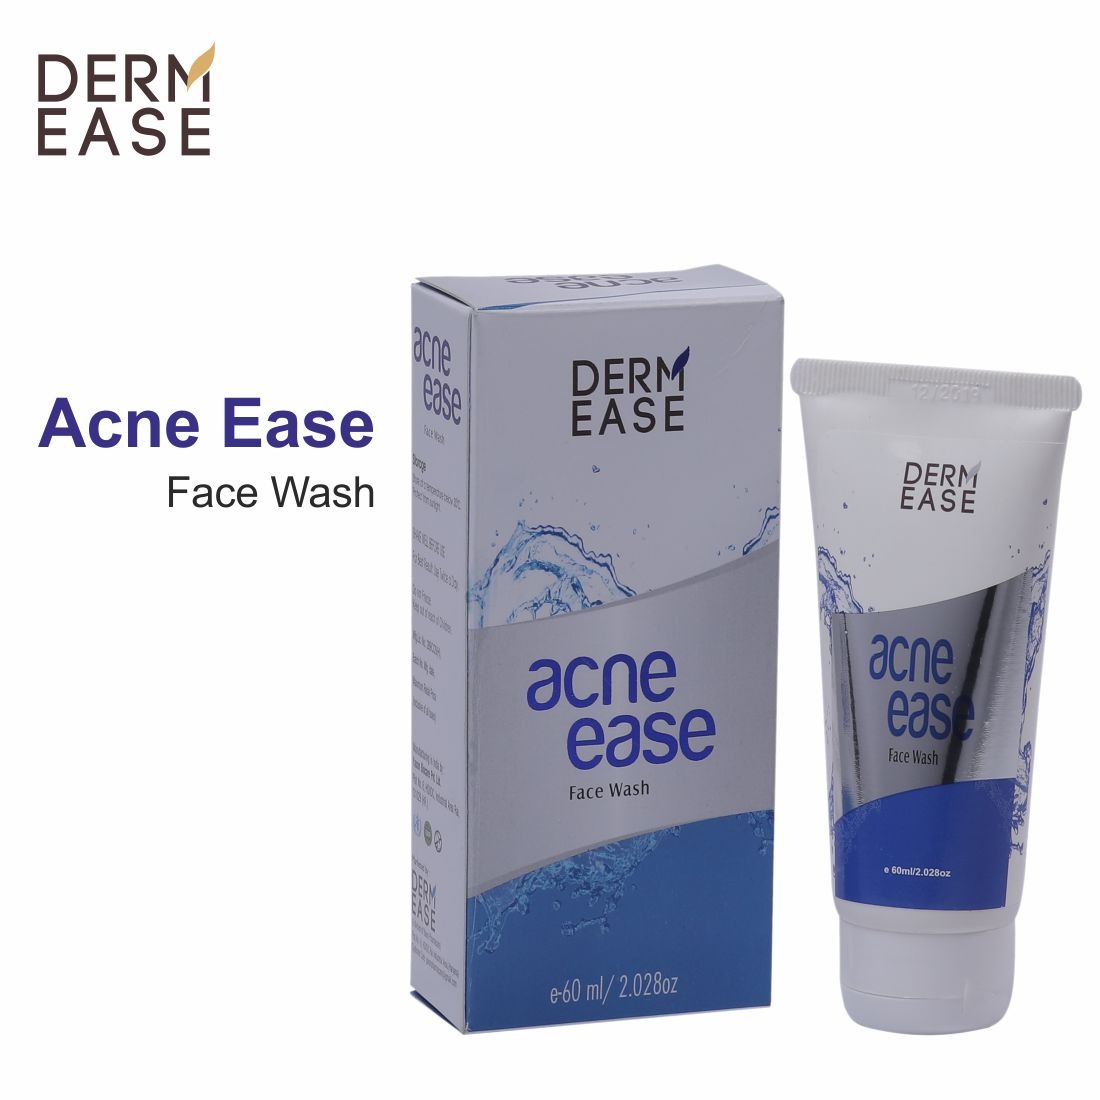 DERM EASE Acne Ease Face Wash